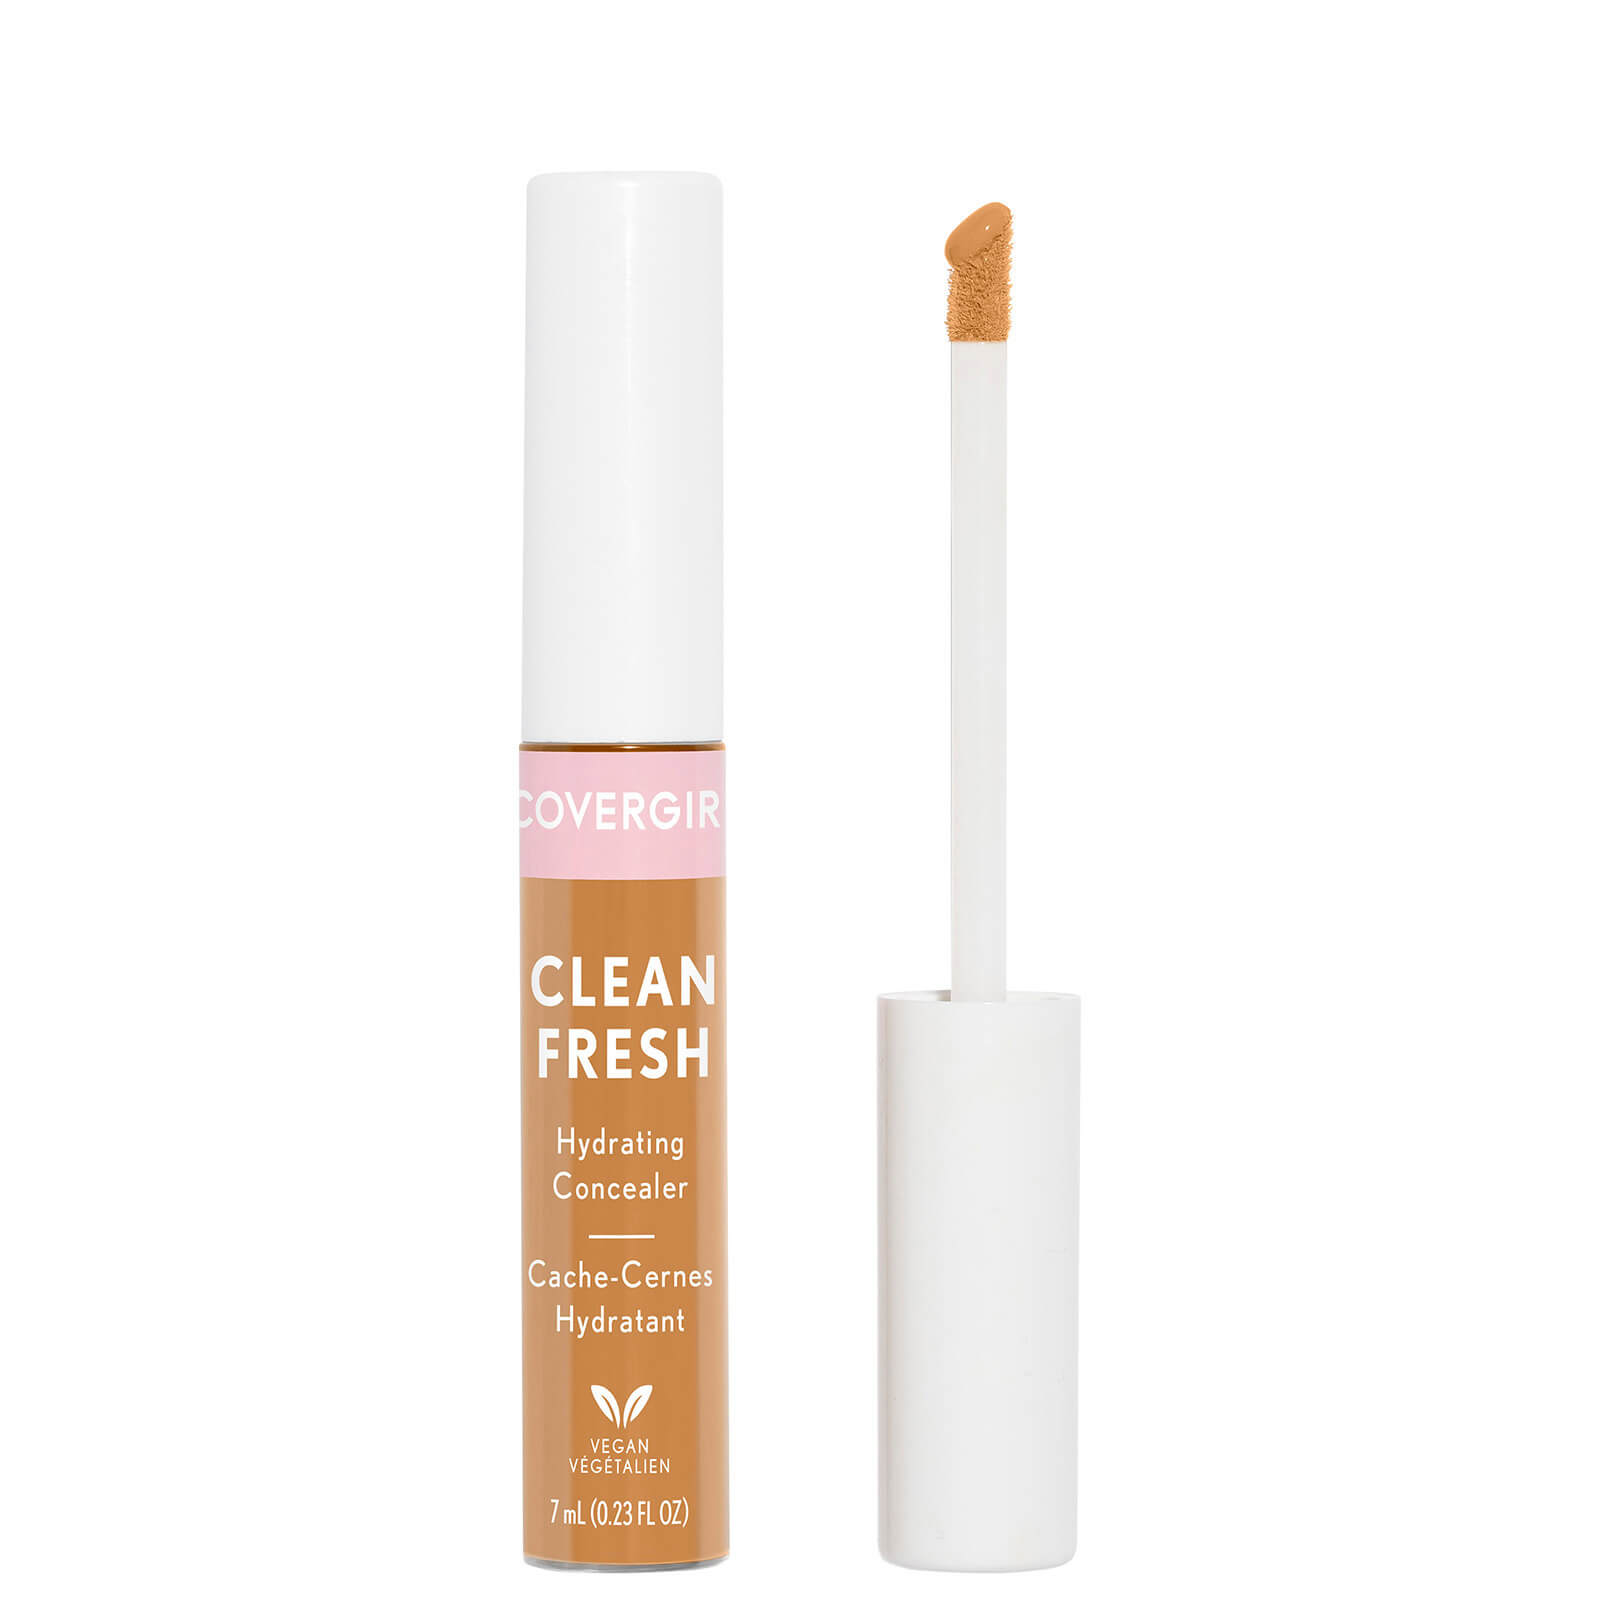 Covergirl Clean Fresh Hydrating Concealer 0.23 oz (Various Shades) - Medium Tan